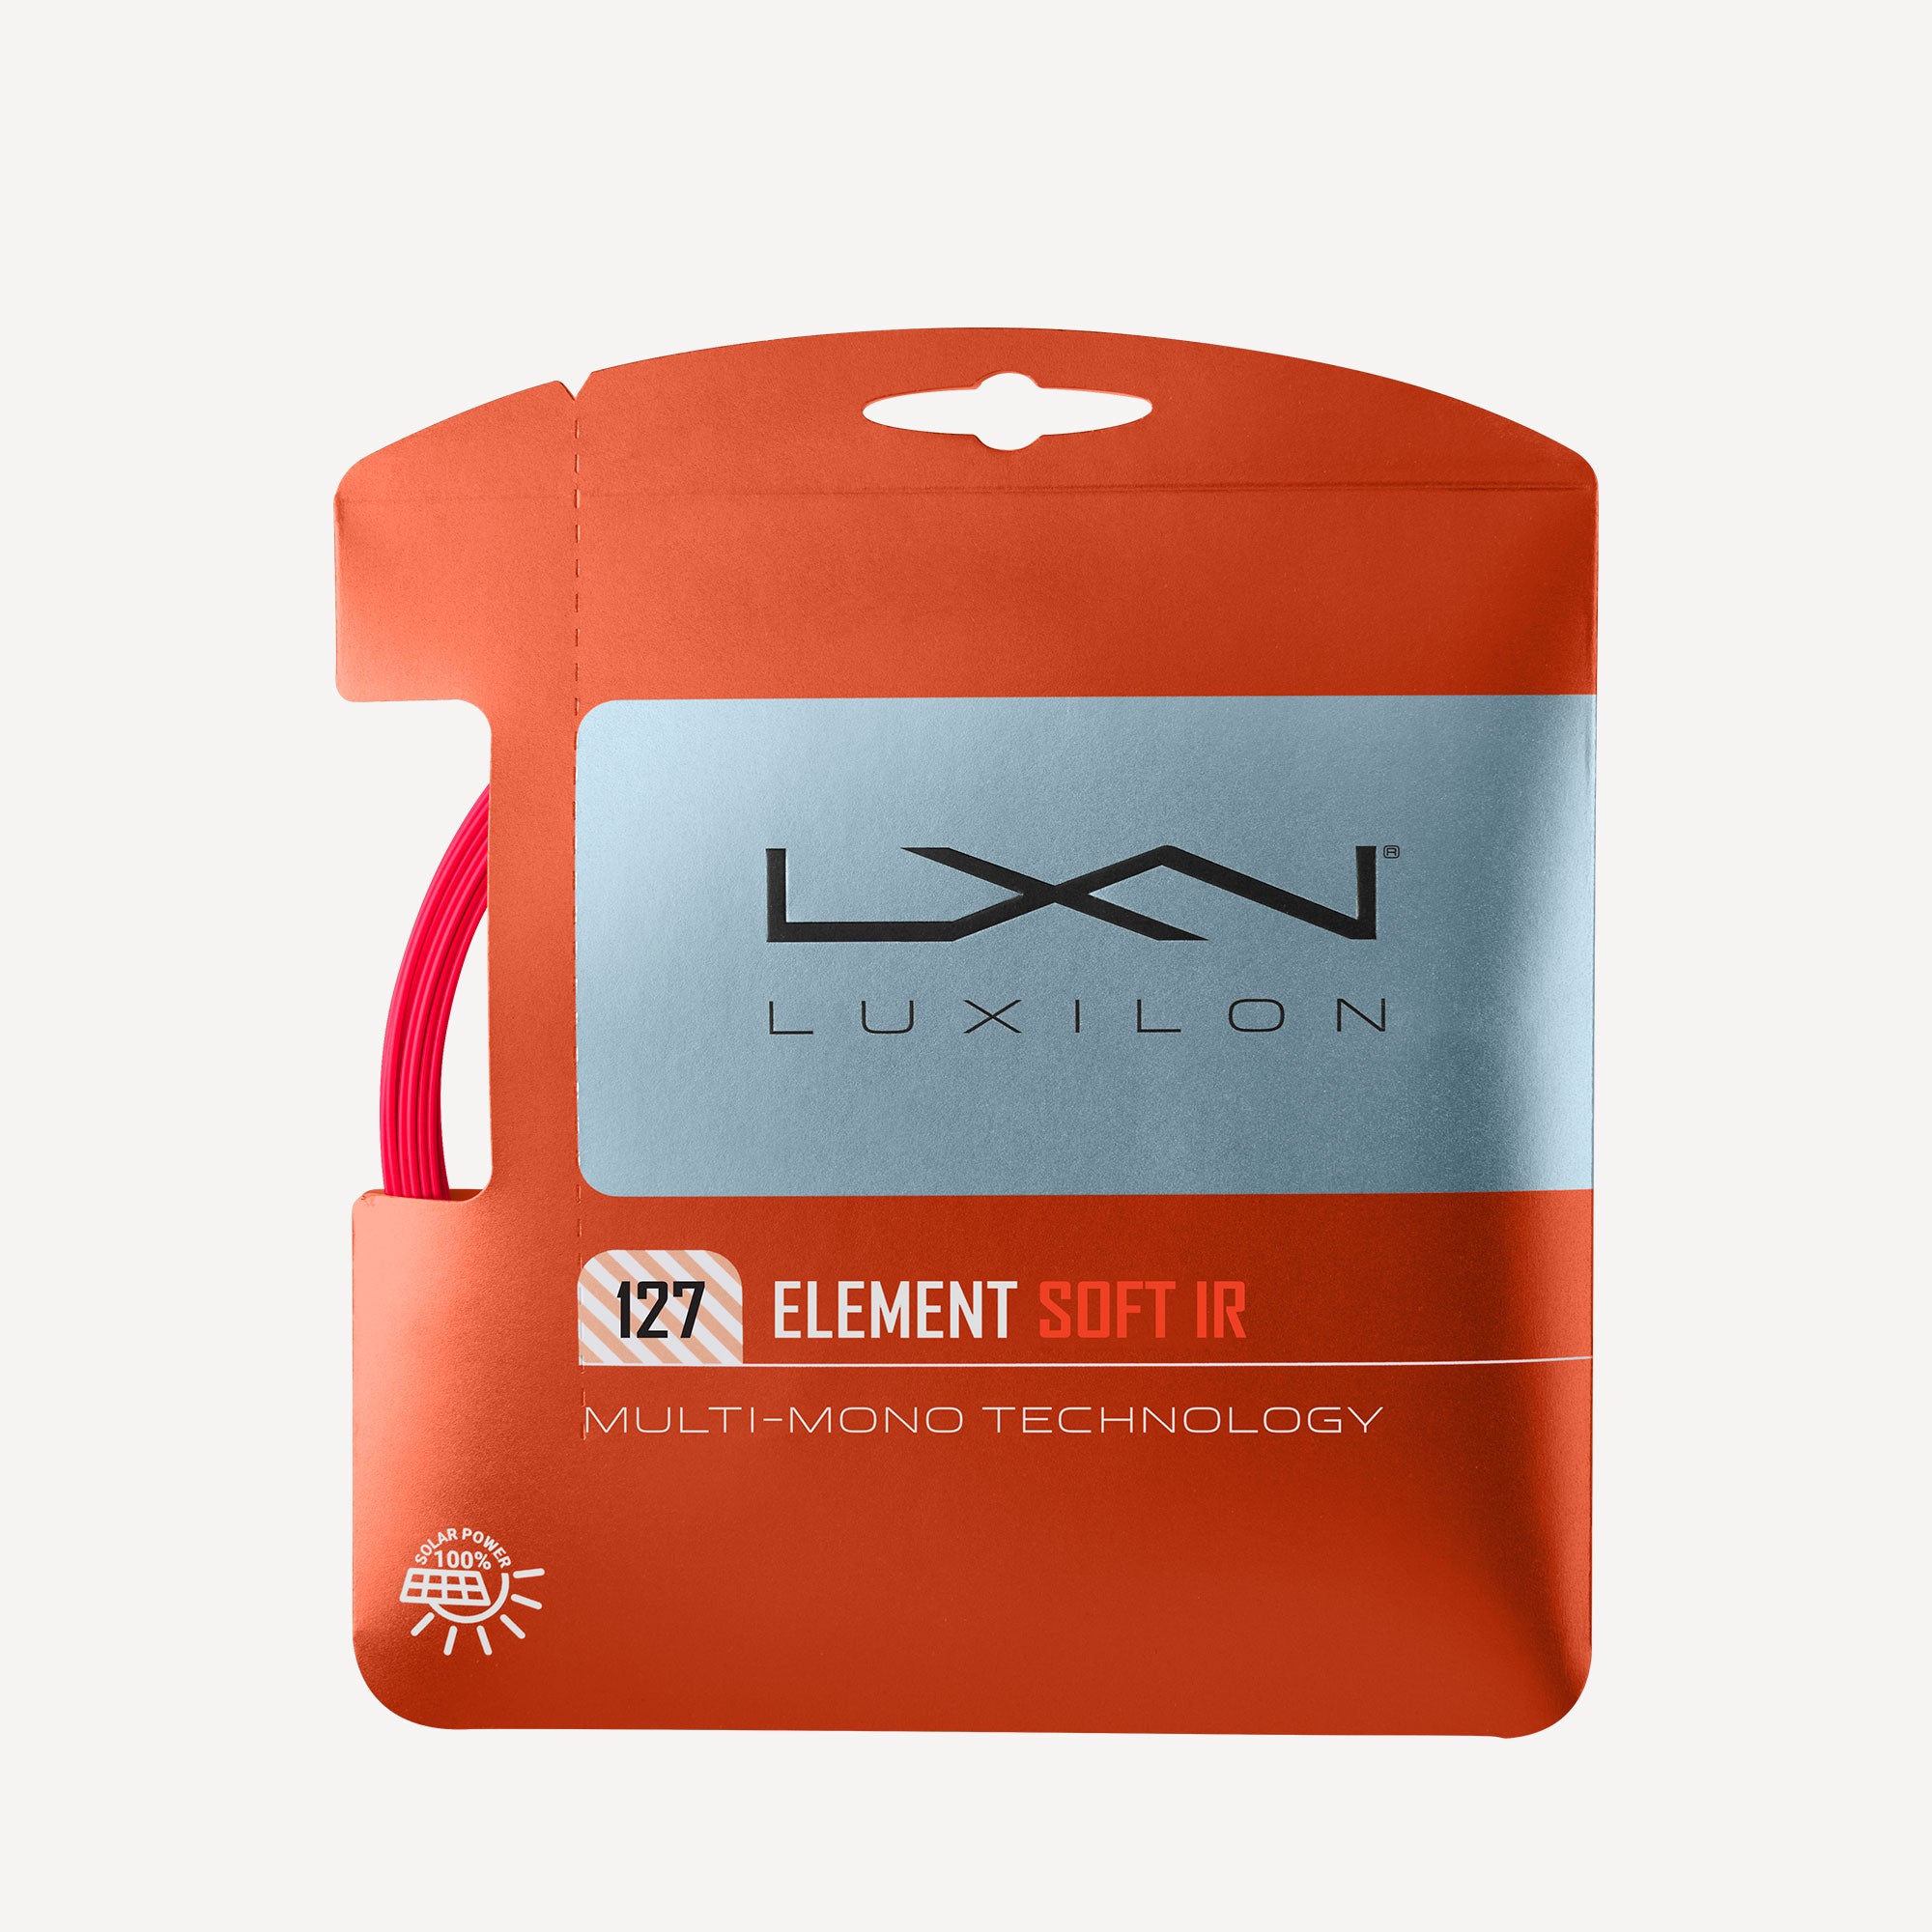 Luxilon Element Soft Tennis String Set 12m Red (1)